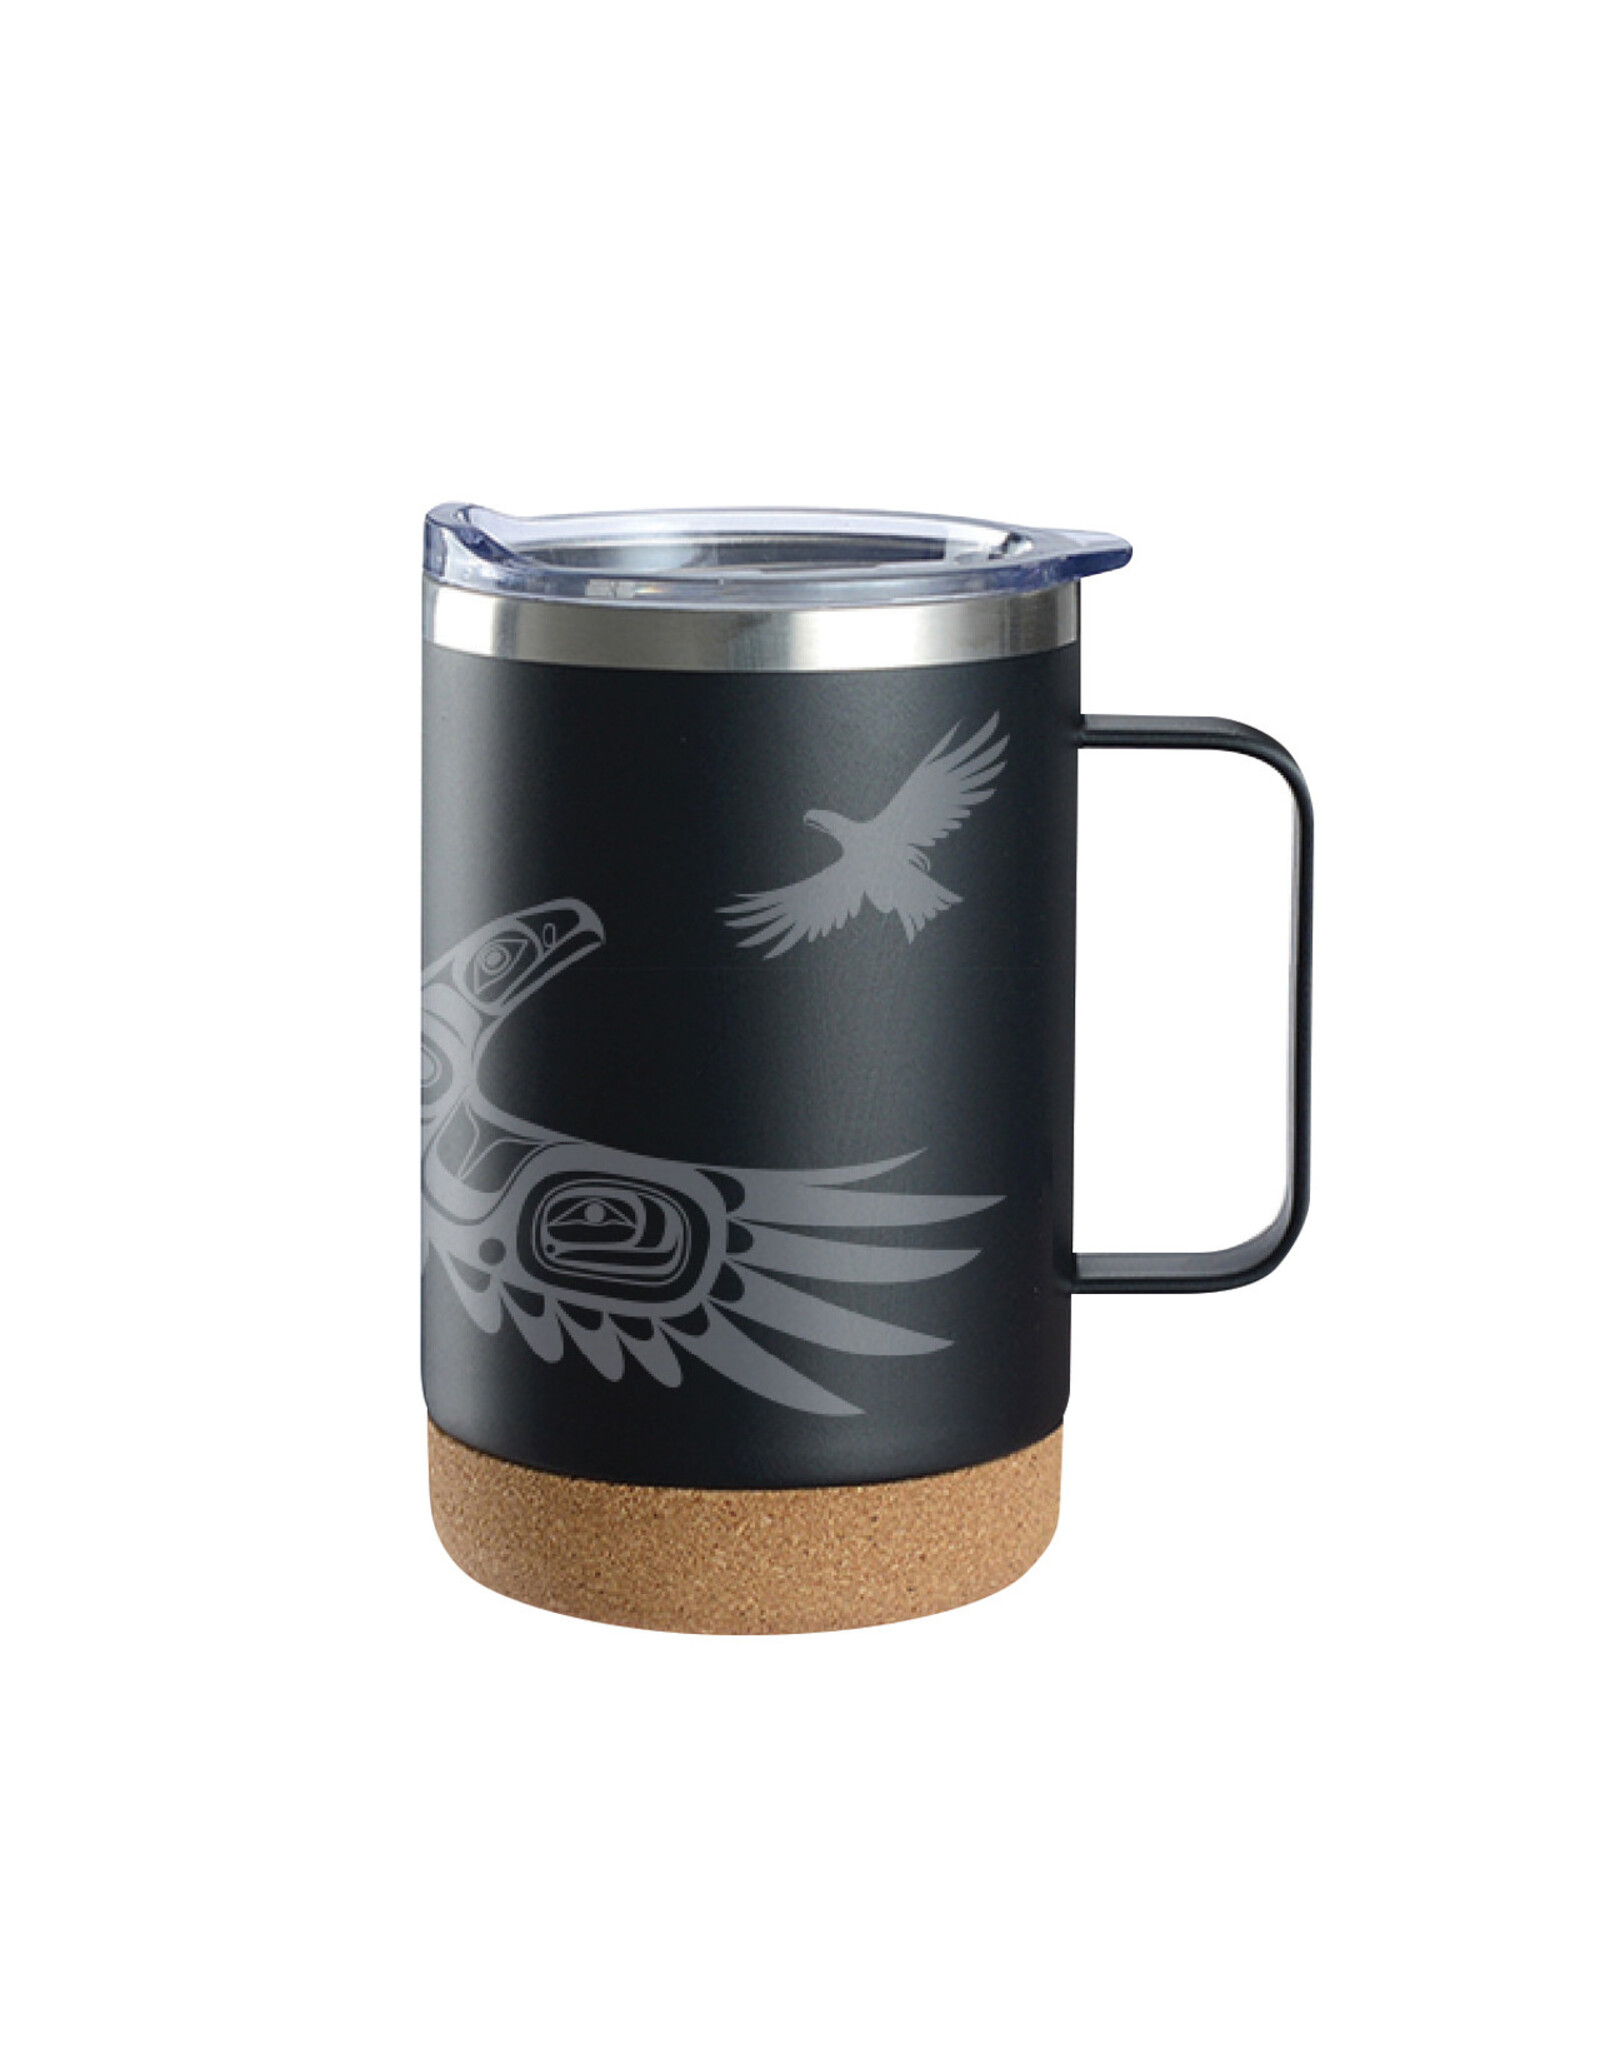 Cork Base Travel Mug with Handle - Soaring Eagle by Corey Bulpitt